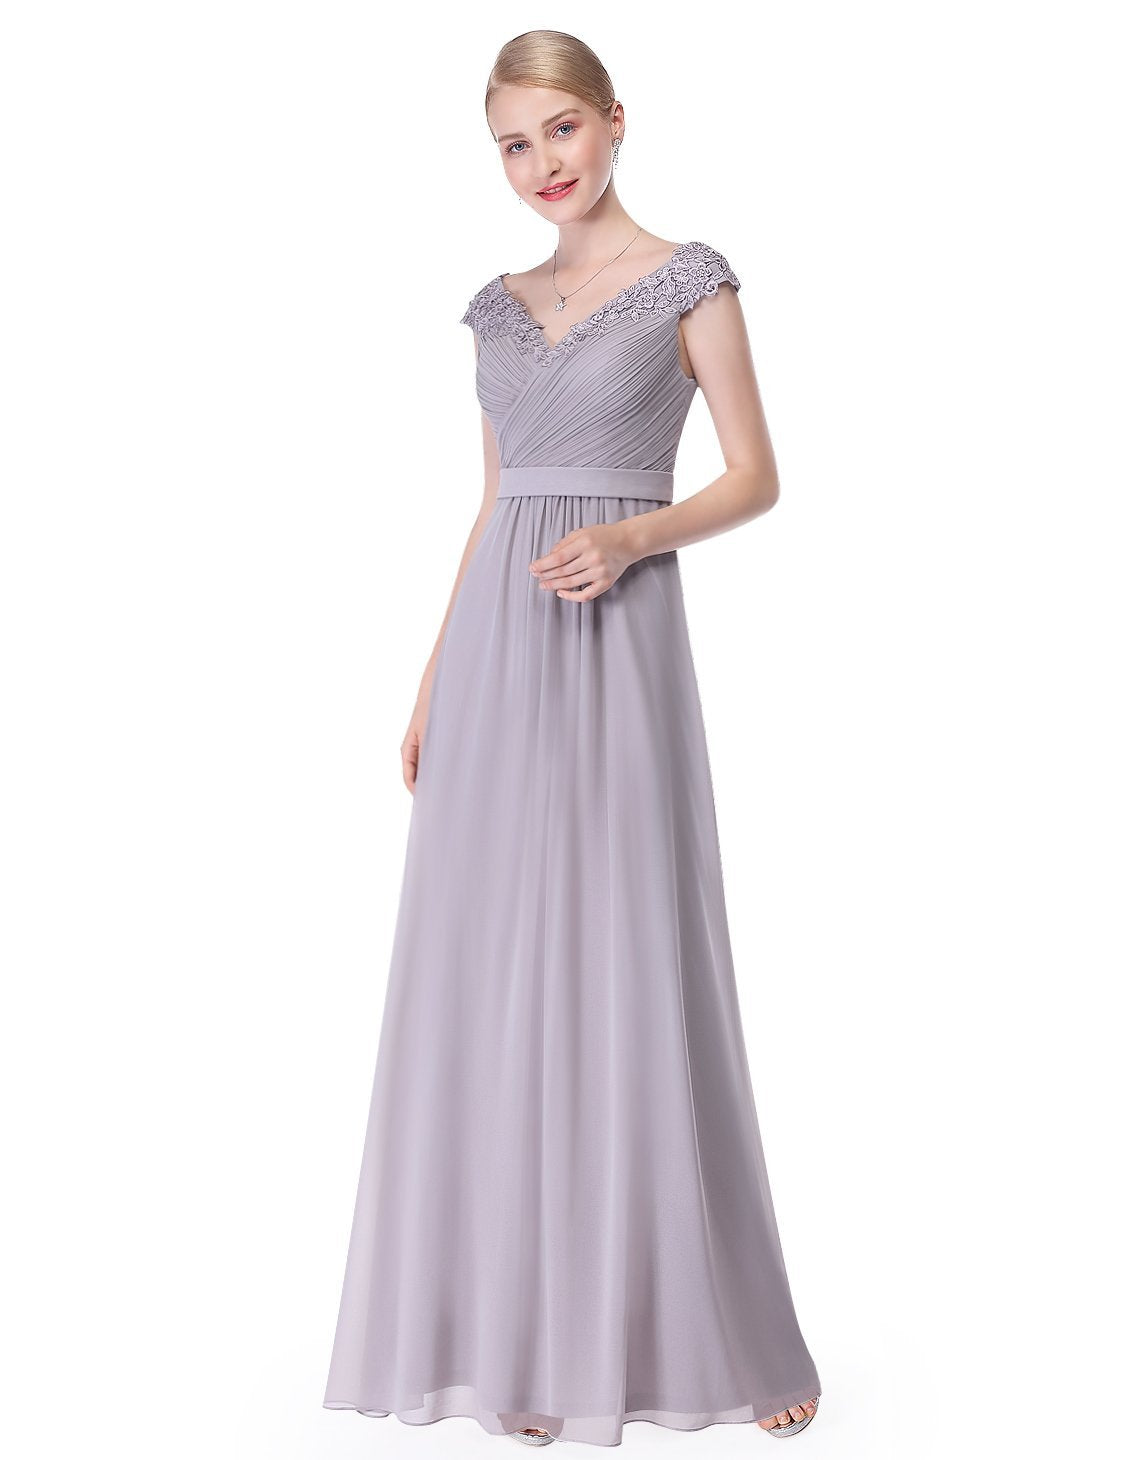 Women's Elegant V-neck Long Bridesmaids Dress